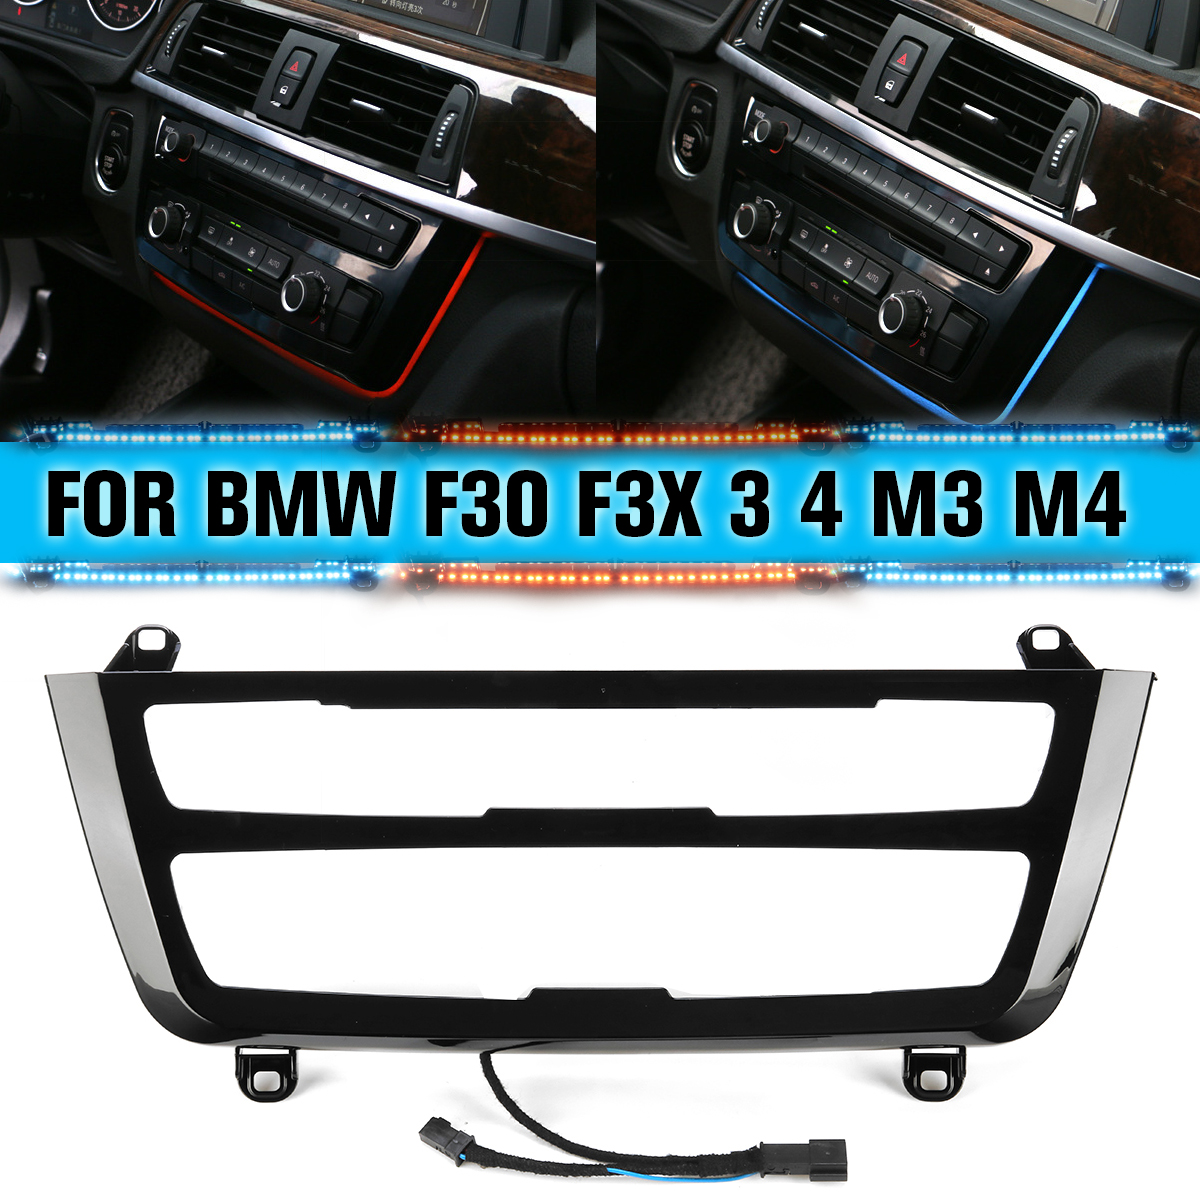 For BMW F30 F3X 3 4 M3 M4 Illuminated LCI AC//radio Trim Retrofit LED ABS